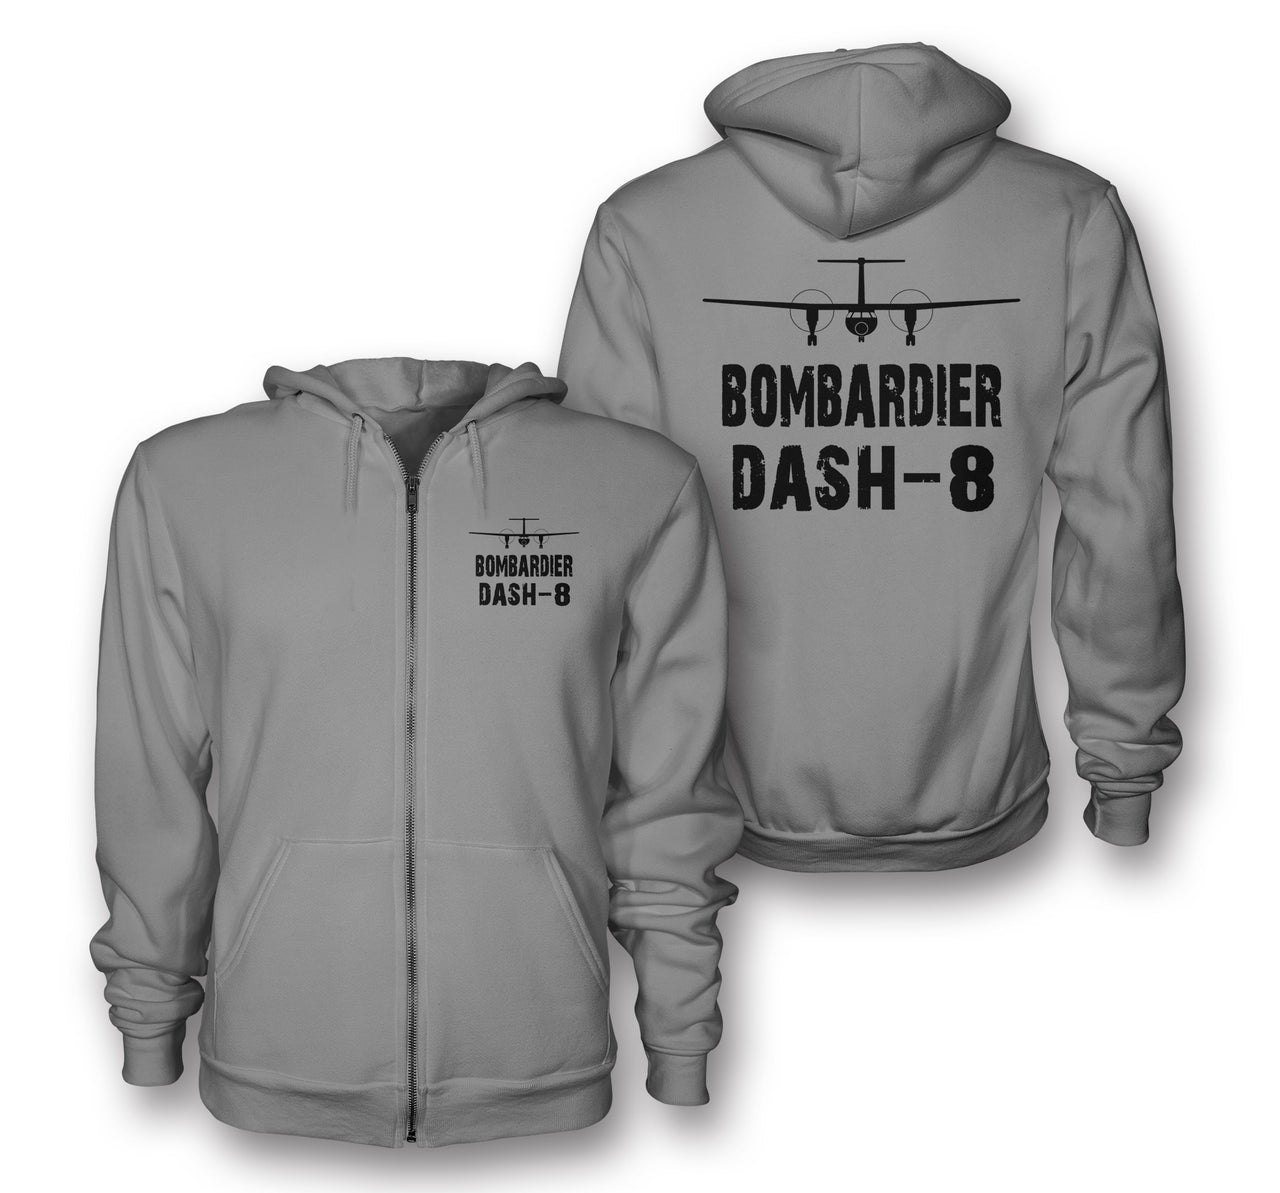 Bombardier Dash-8 & Plane Designed Zipped Hoodies